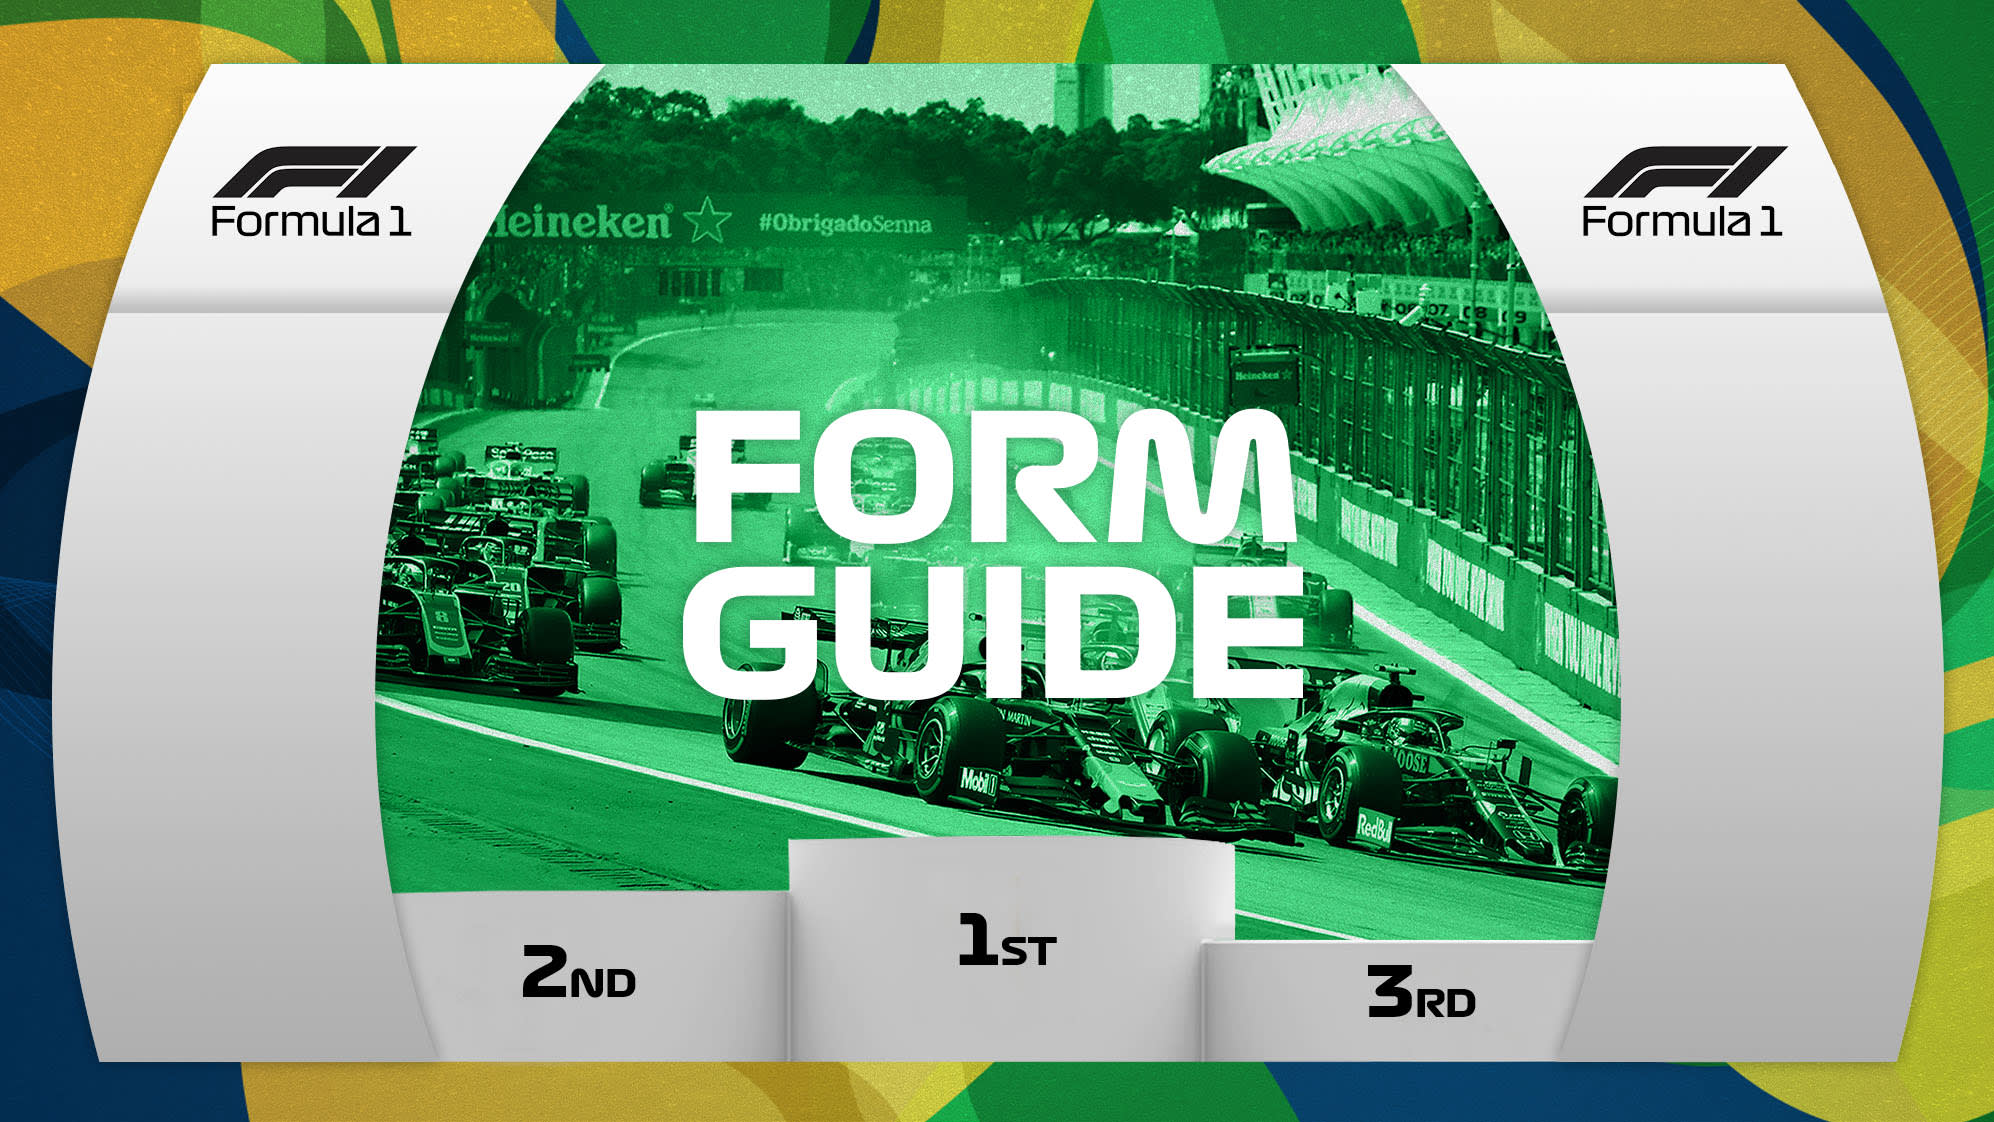 Formula 1, Brazil the Guide